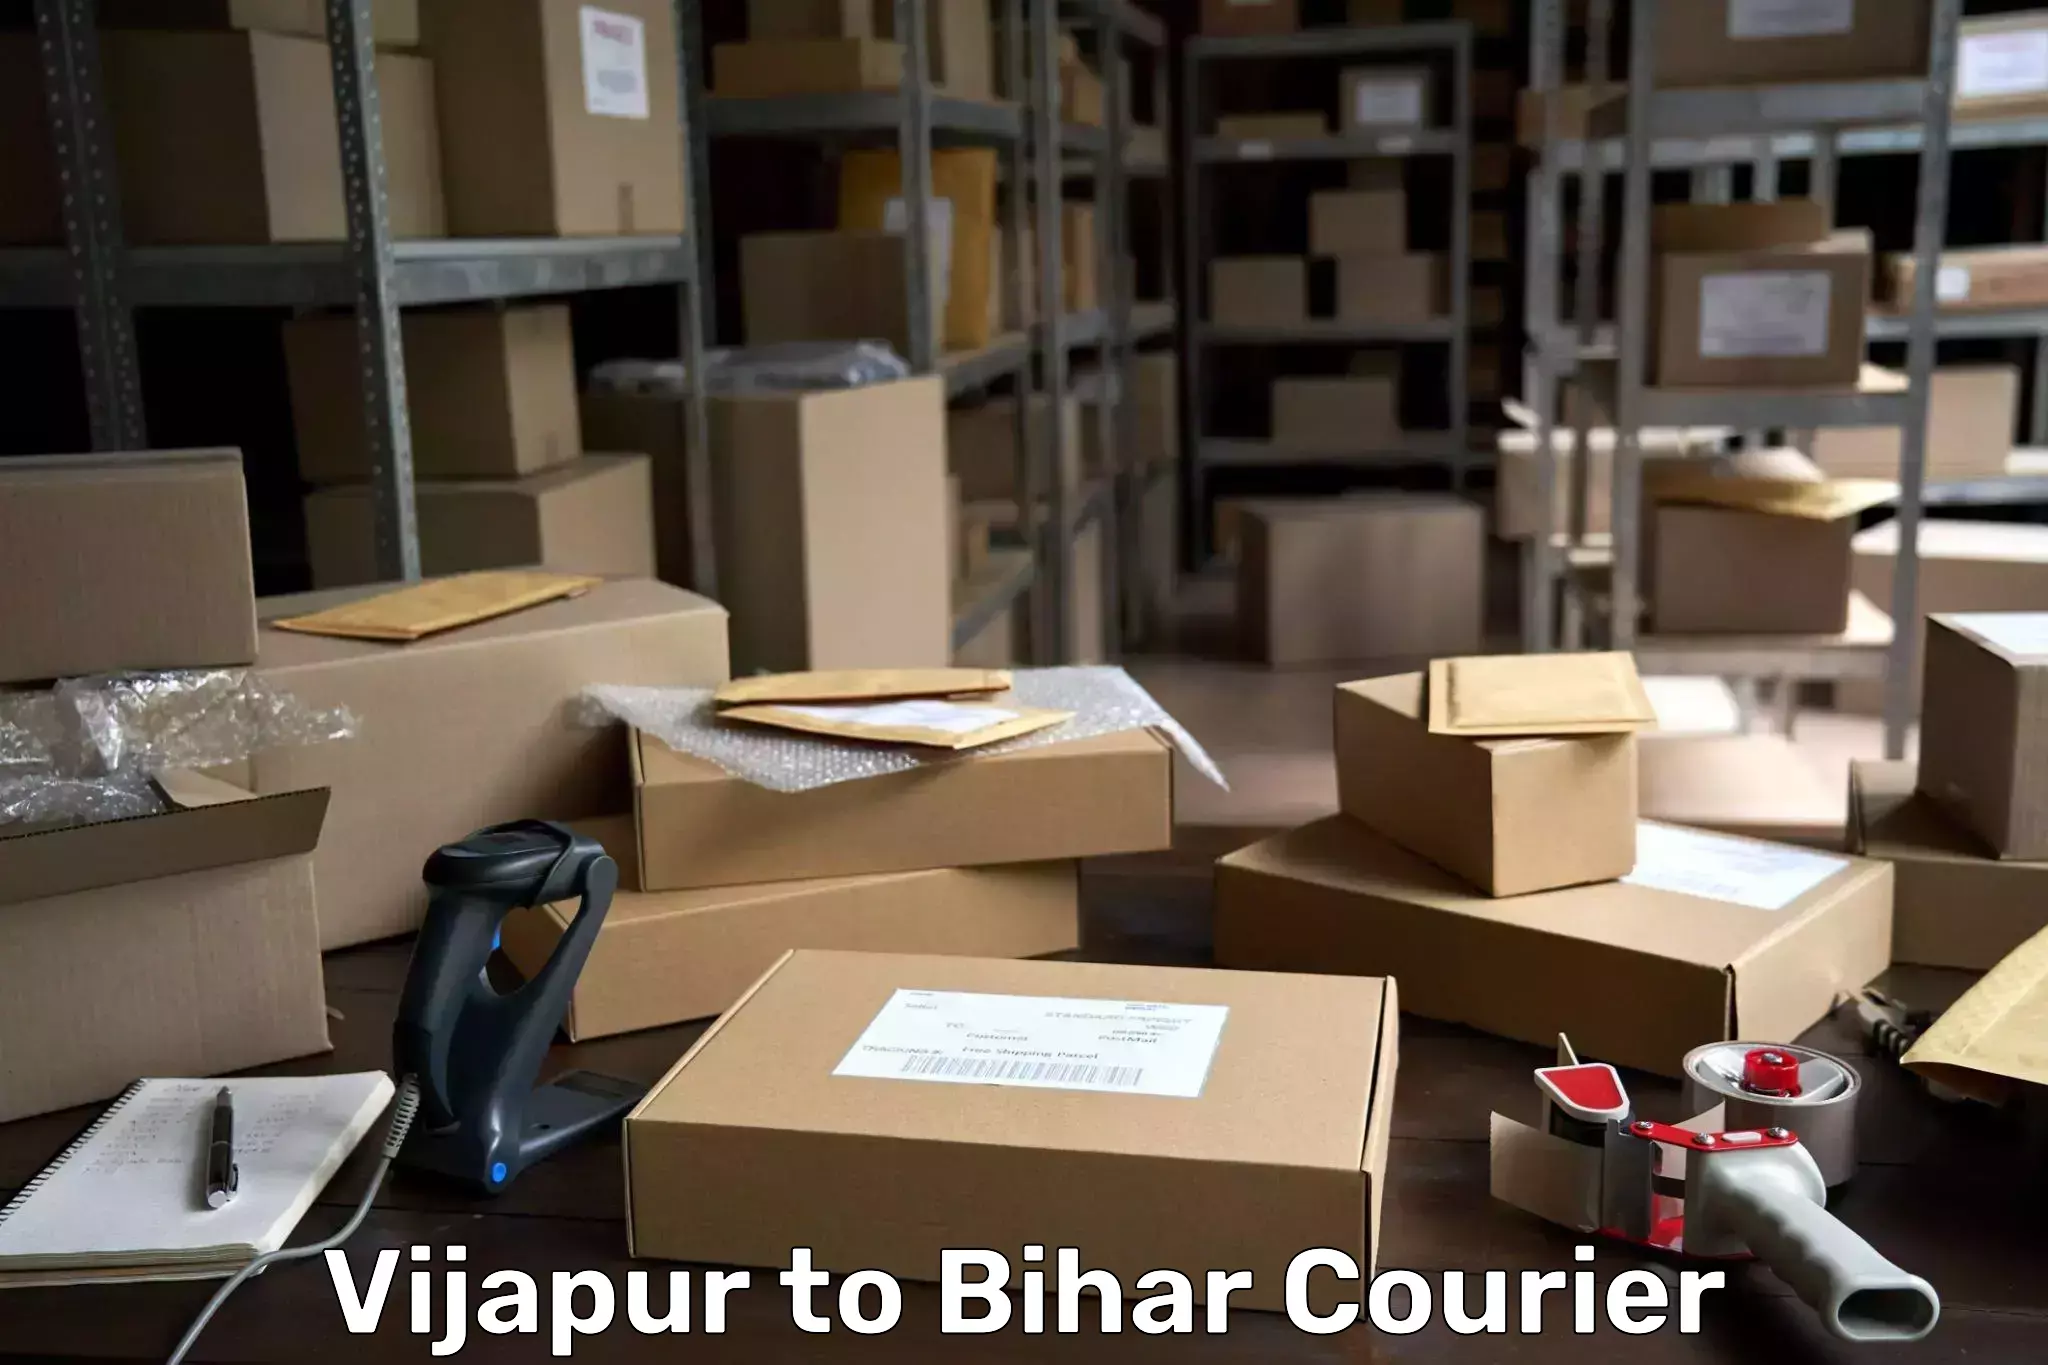 Supply chain delivery Vijapur to Biraul